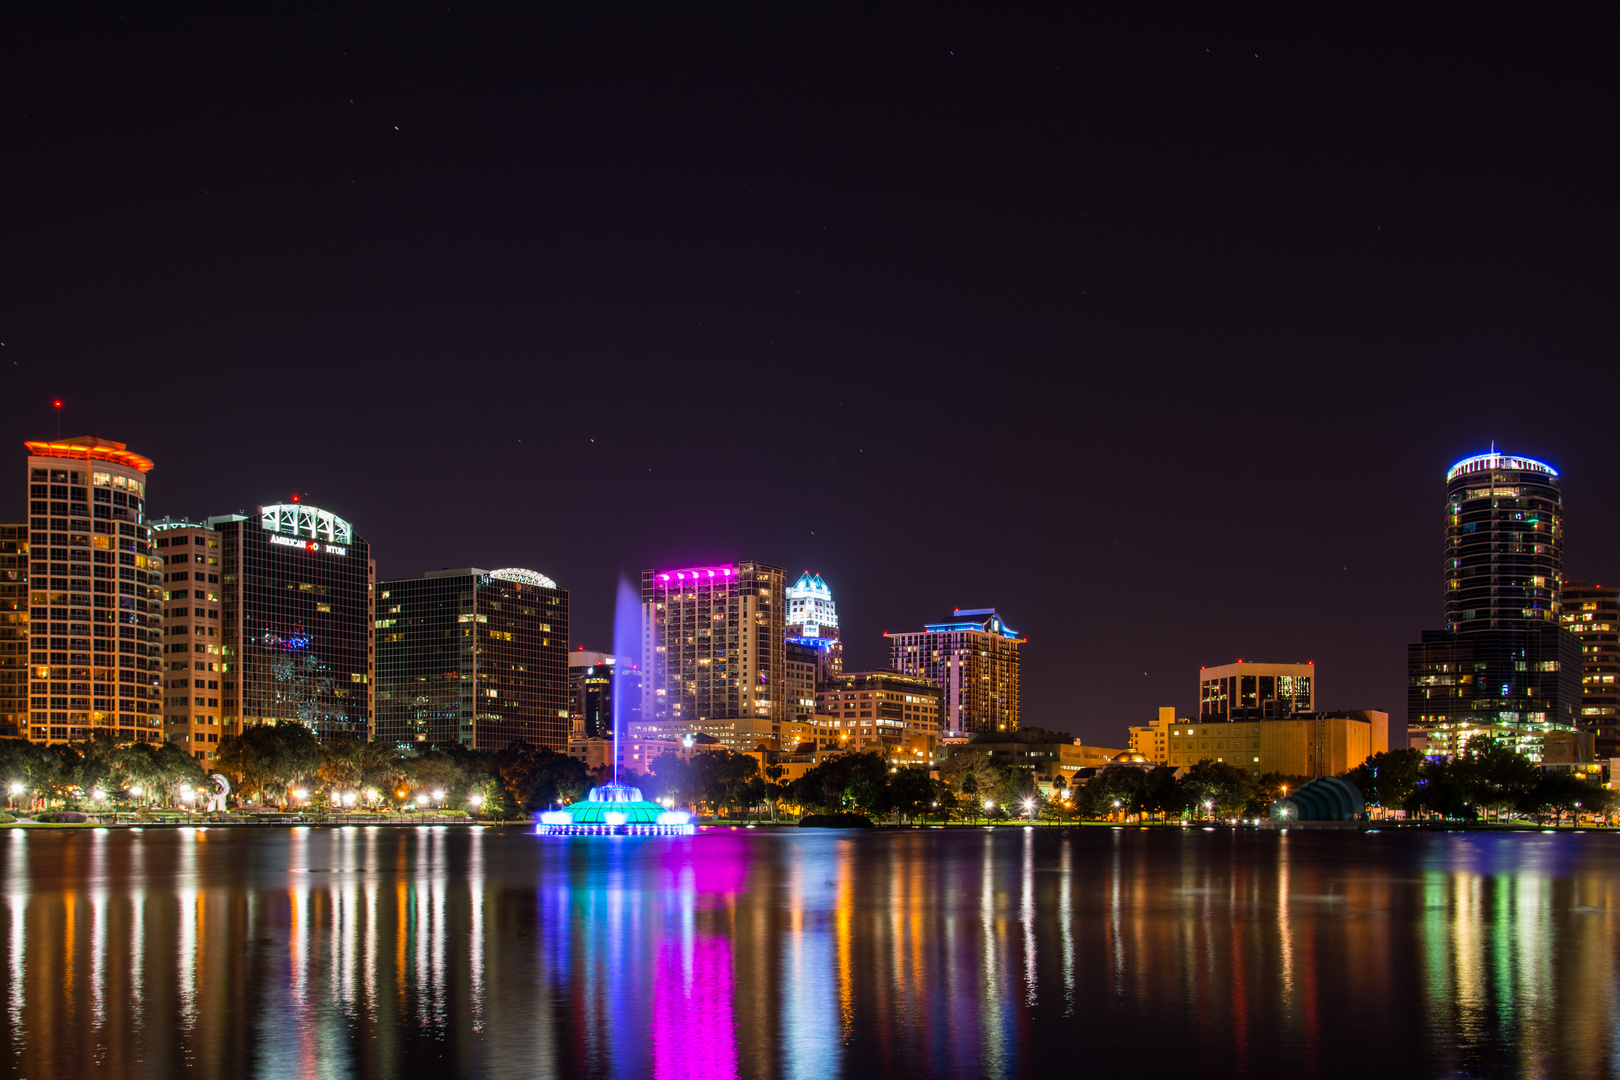 Orlando by Night